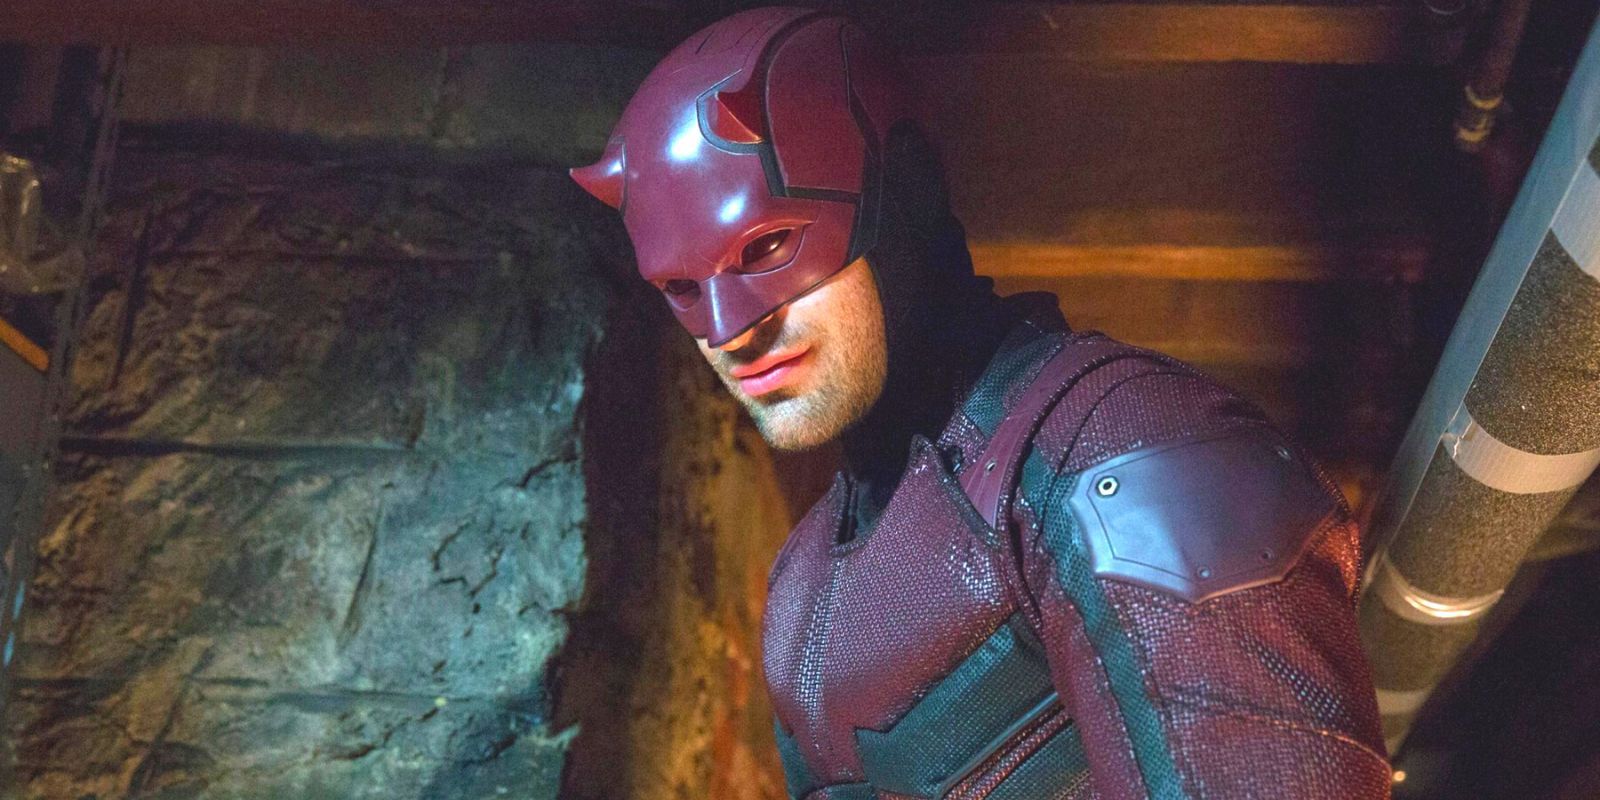 Daredevil in full superhero attire looking down in a basement